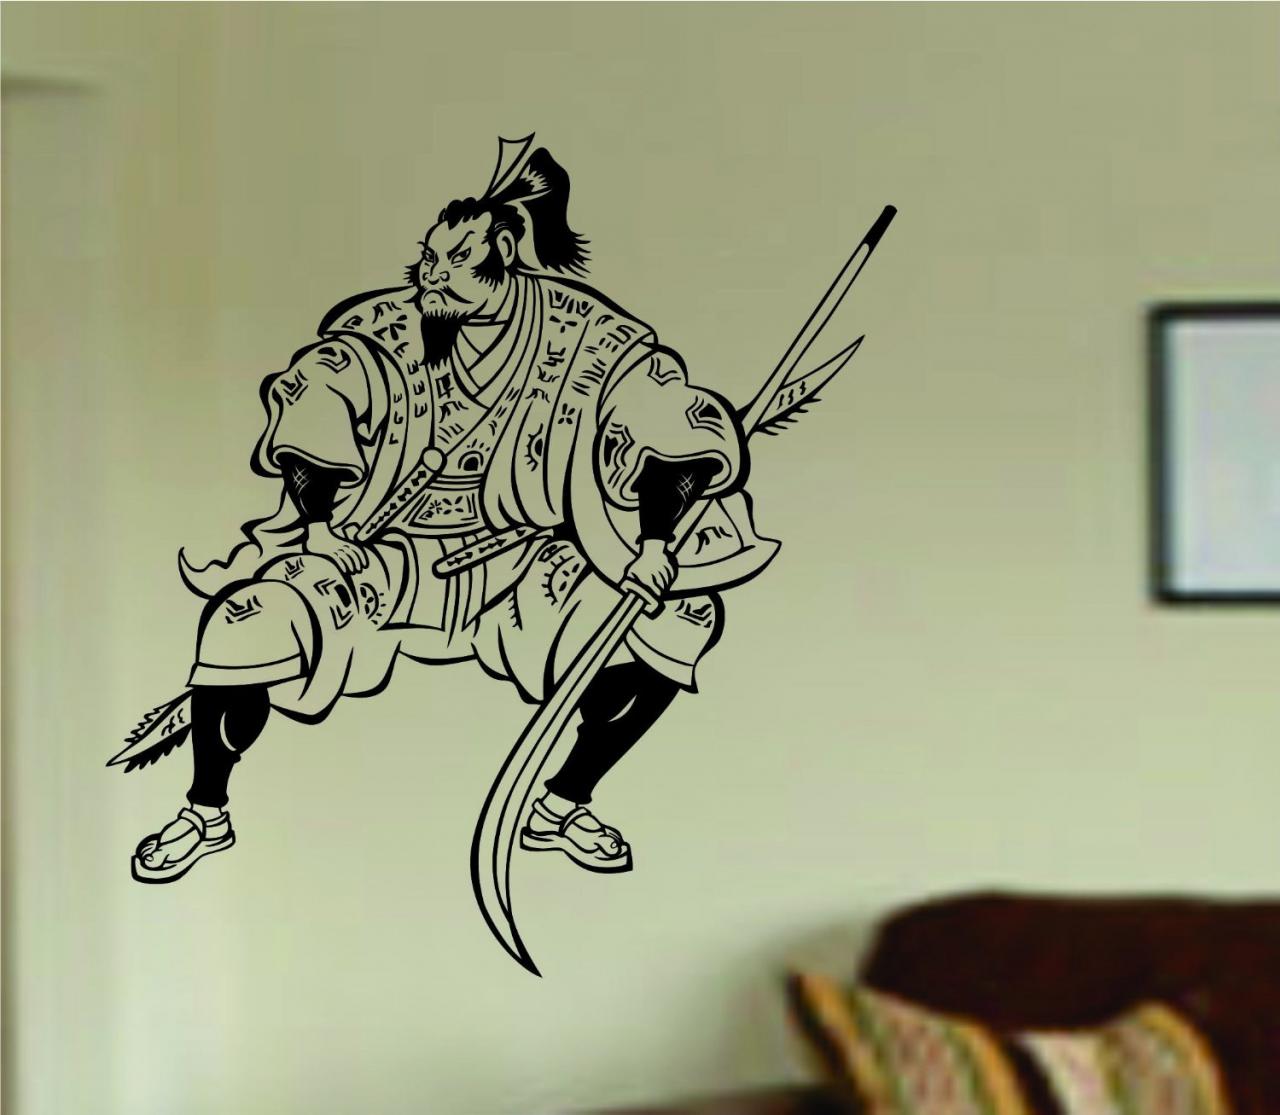 Samurai Version 102 Wall Decal Sticker Mural Art Graphic Dragon Kid Boy Room Asian